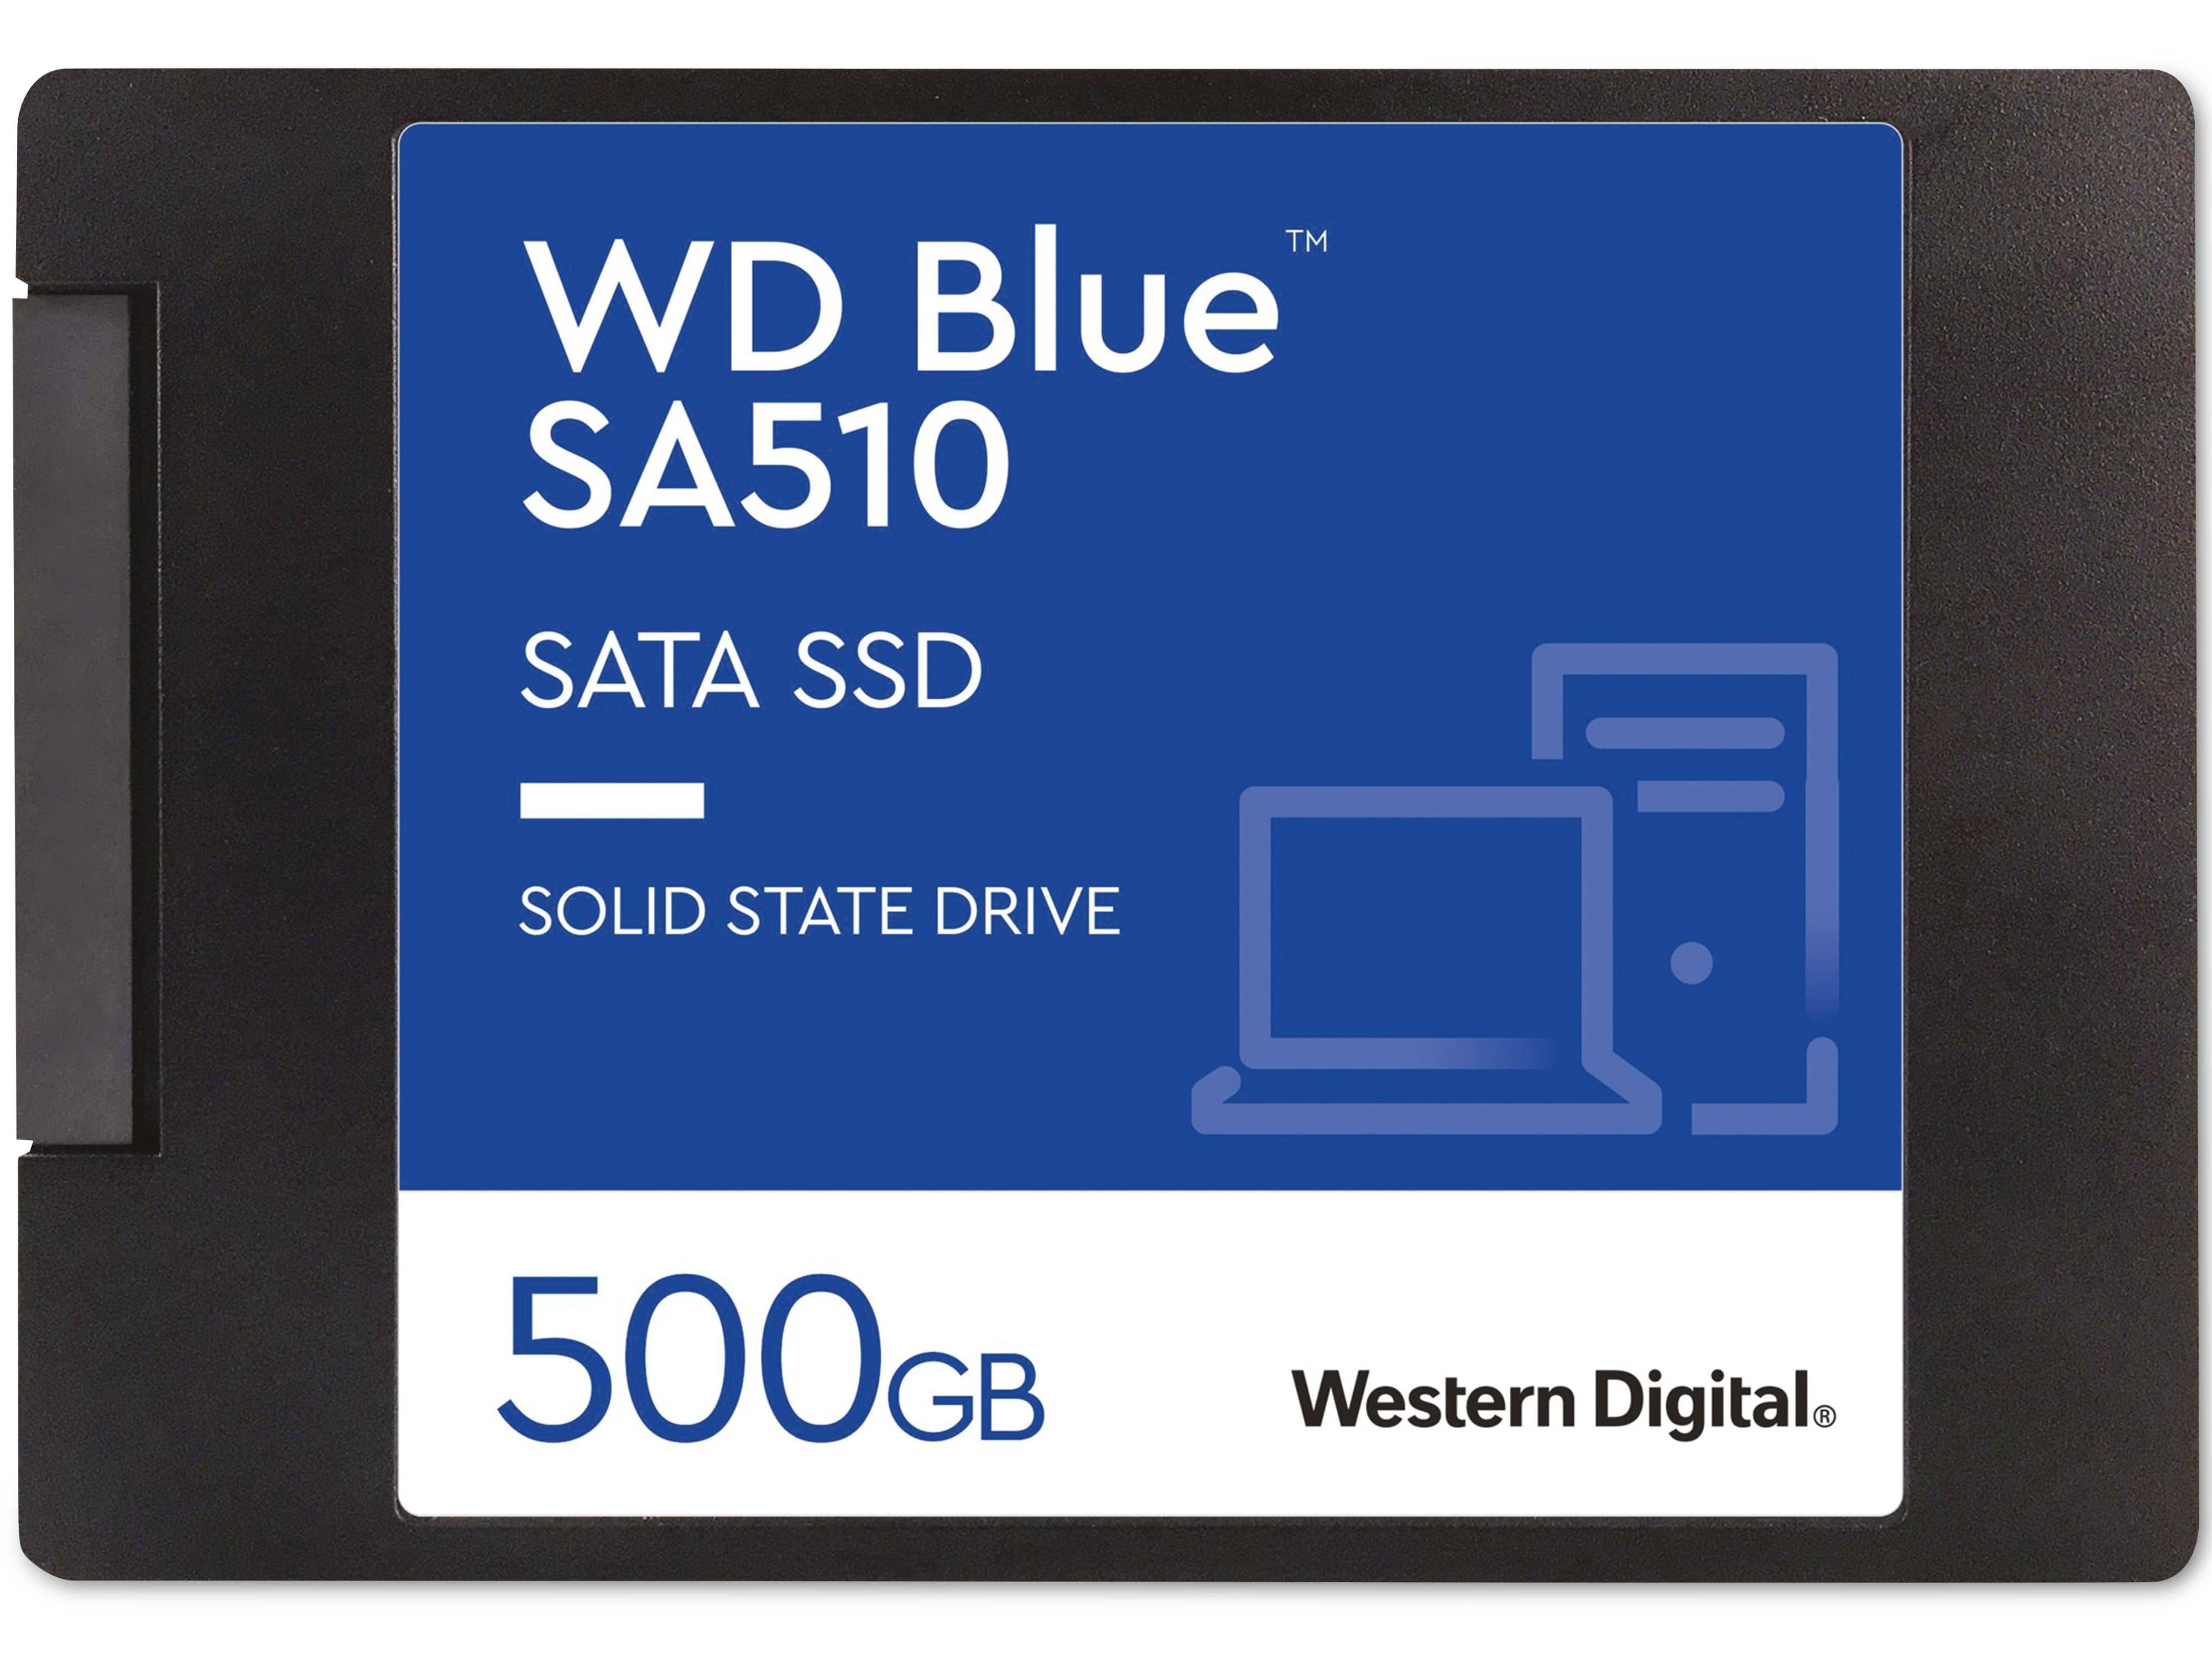 WESTERN DIGITAL SATA-SSD WD Blue SA510, 500